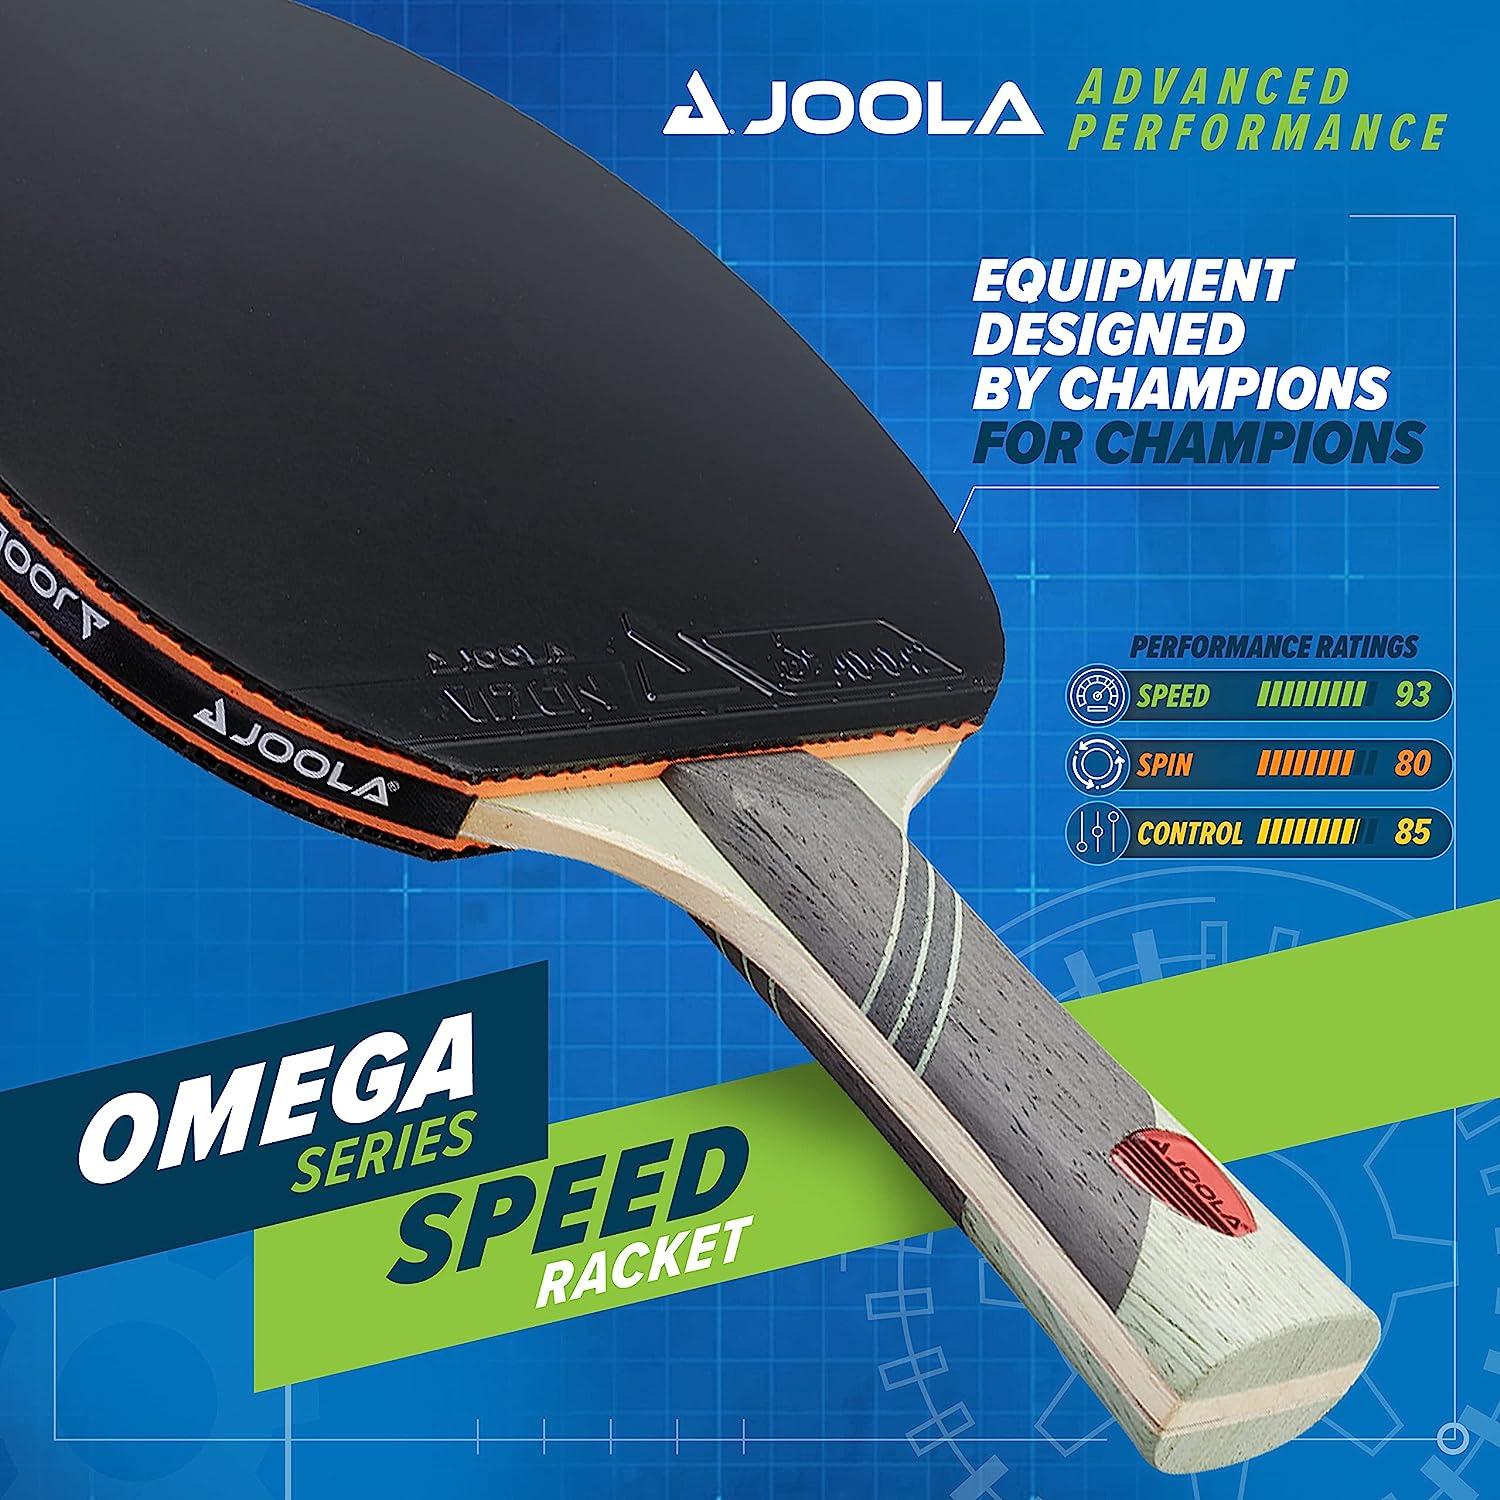 JOOLA Omega Control Table Tennis Racket with Vizon Rubber - JOOLA USA